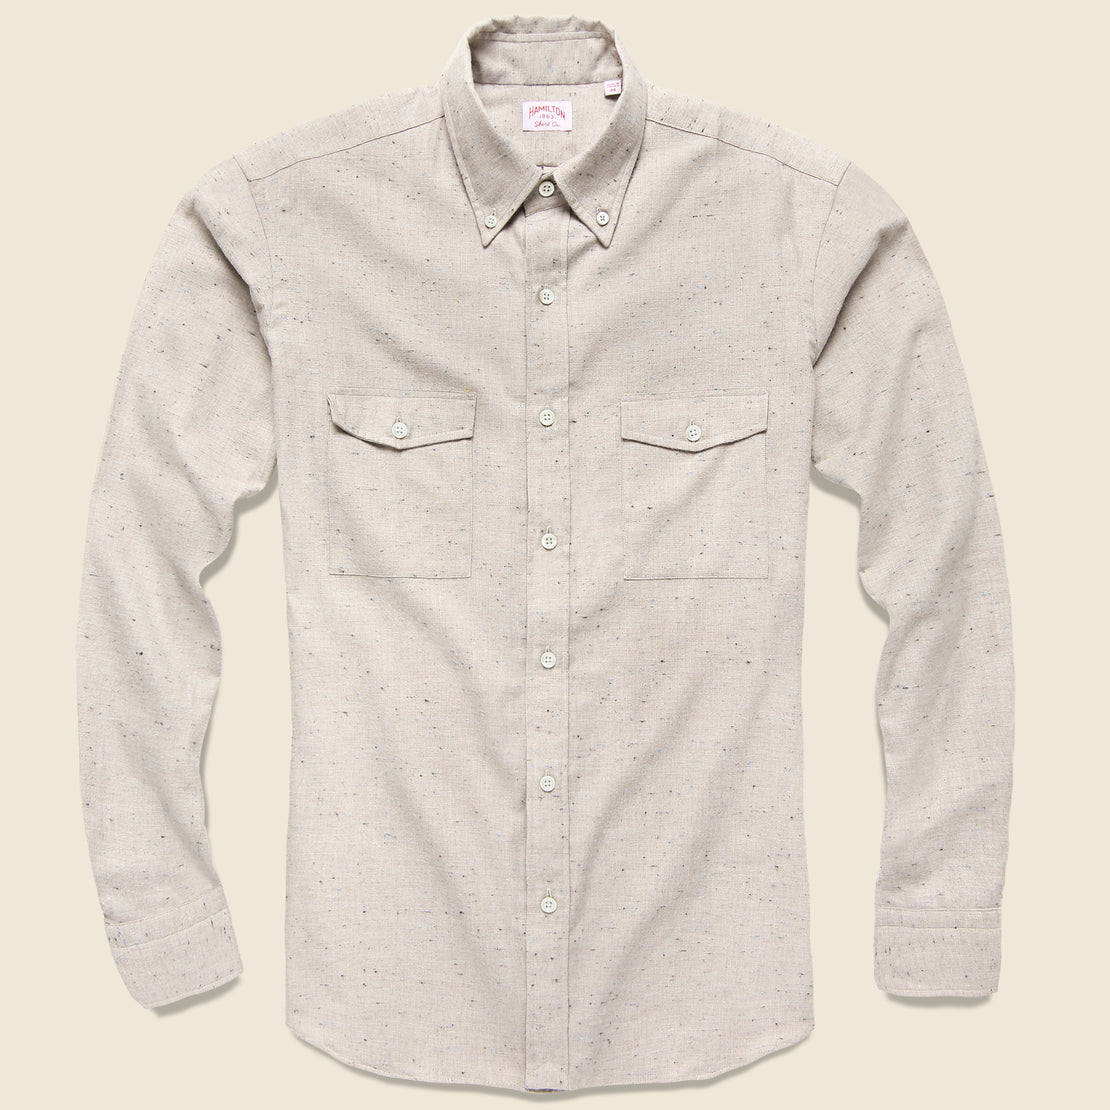 Hamilton Shirt Co. Twill Fleck Shirt - Tan